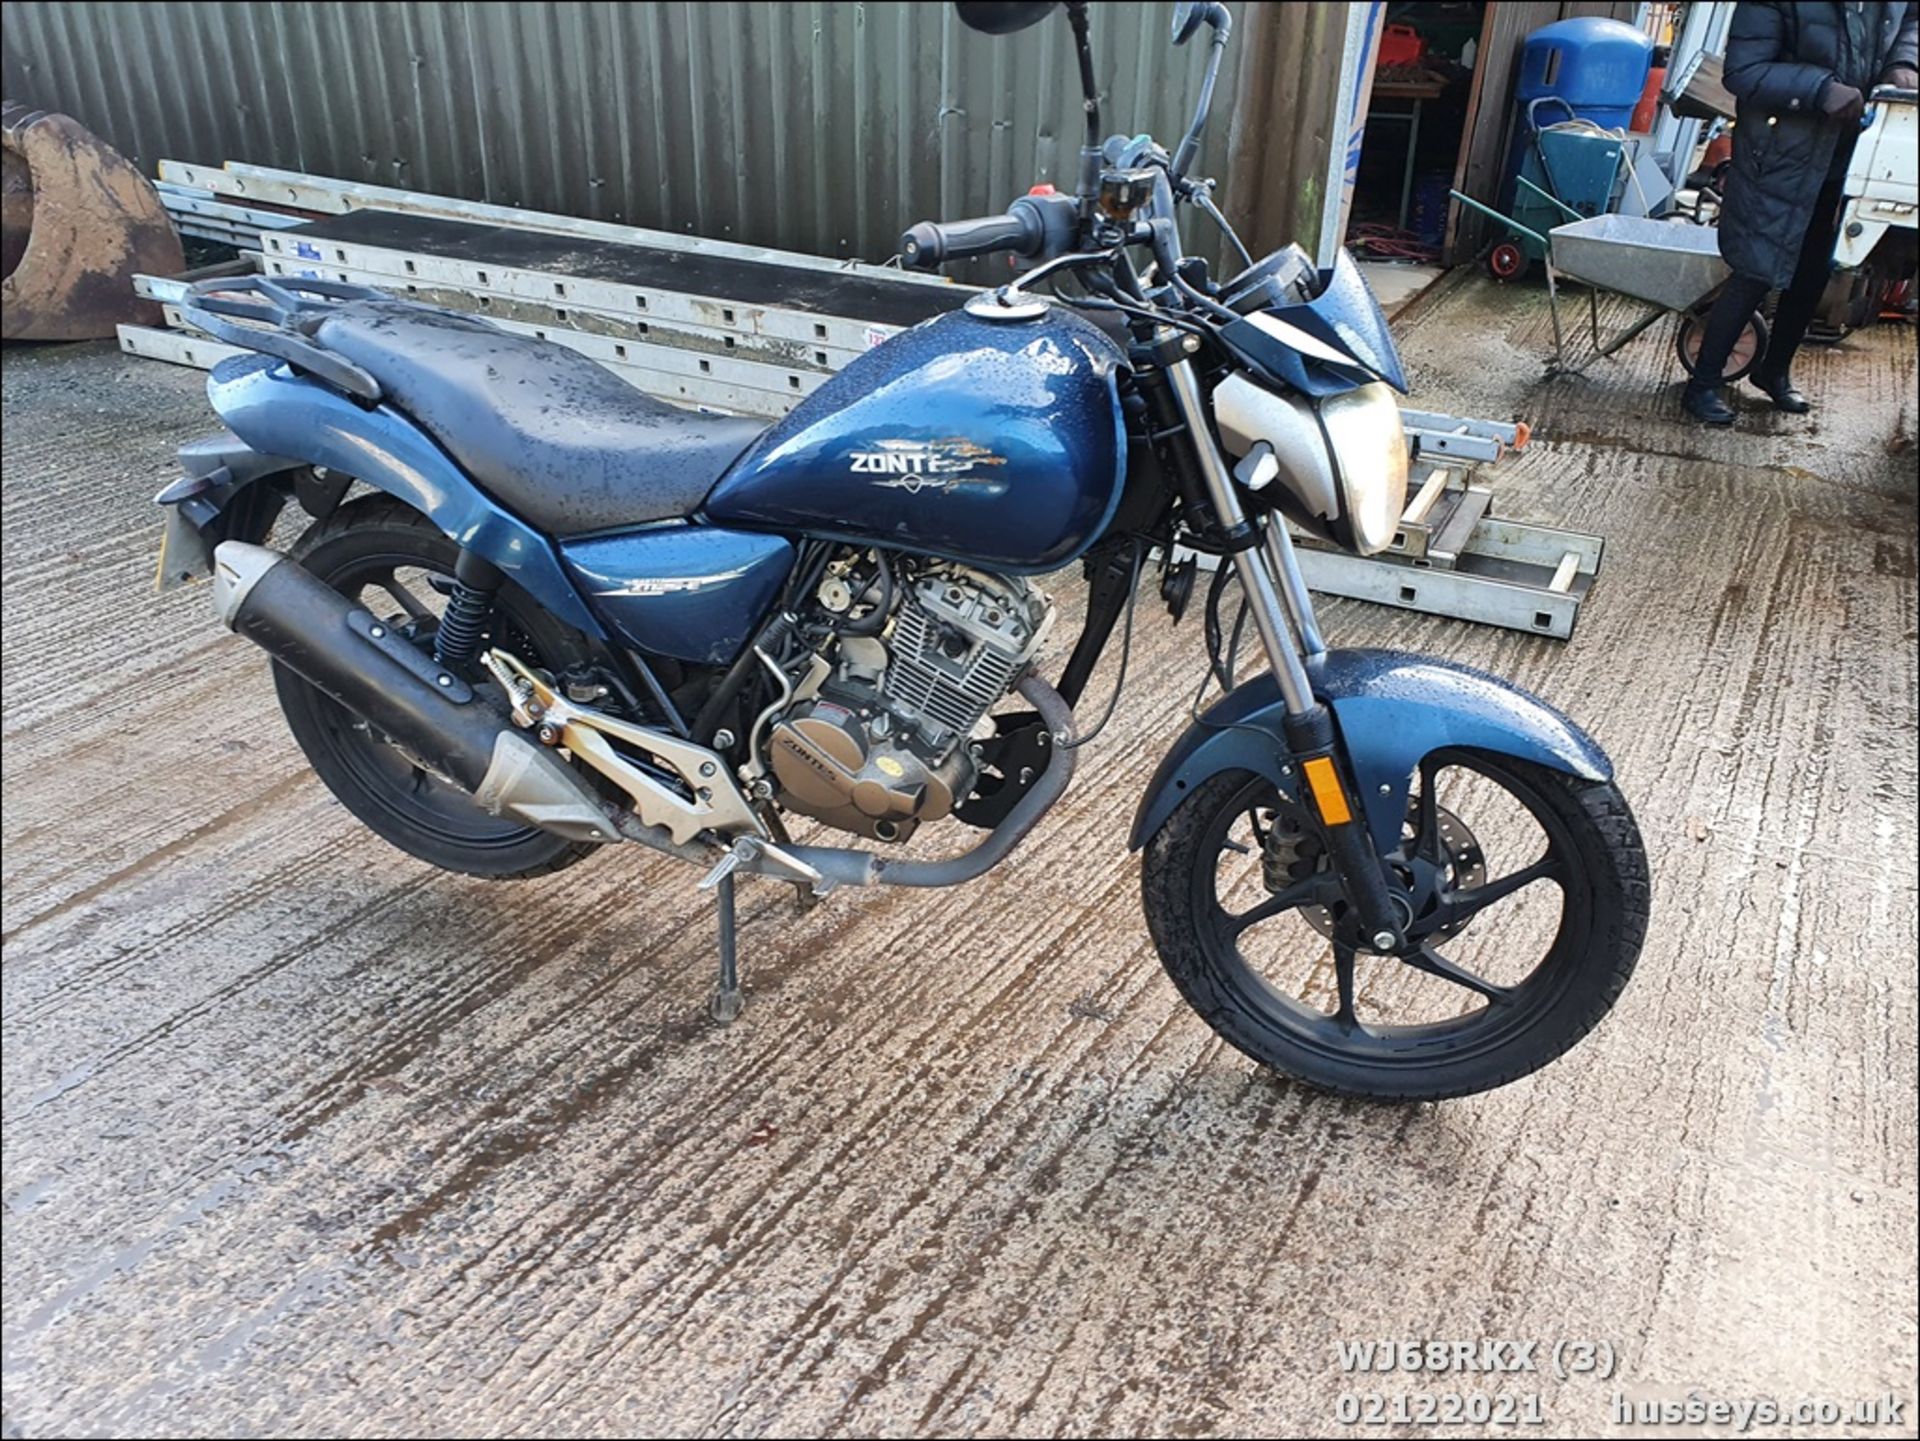 18/68 ZONTES MANTIS - 124cc Motorcycle (Blue, 3k) - Image 2 of 13